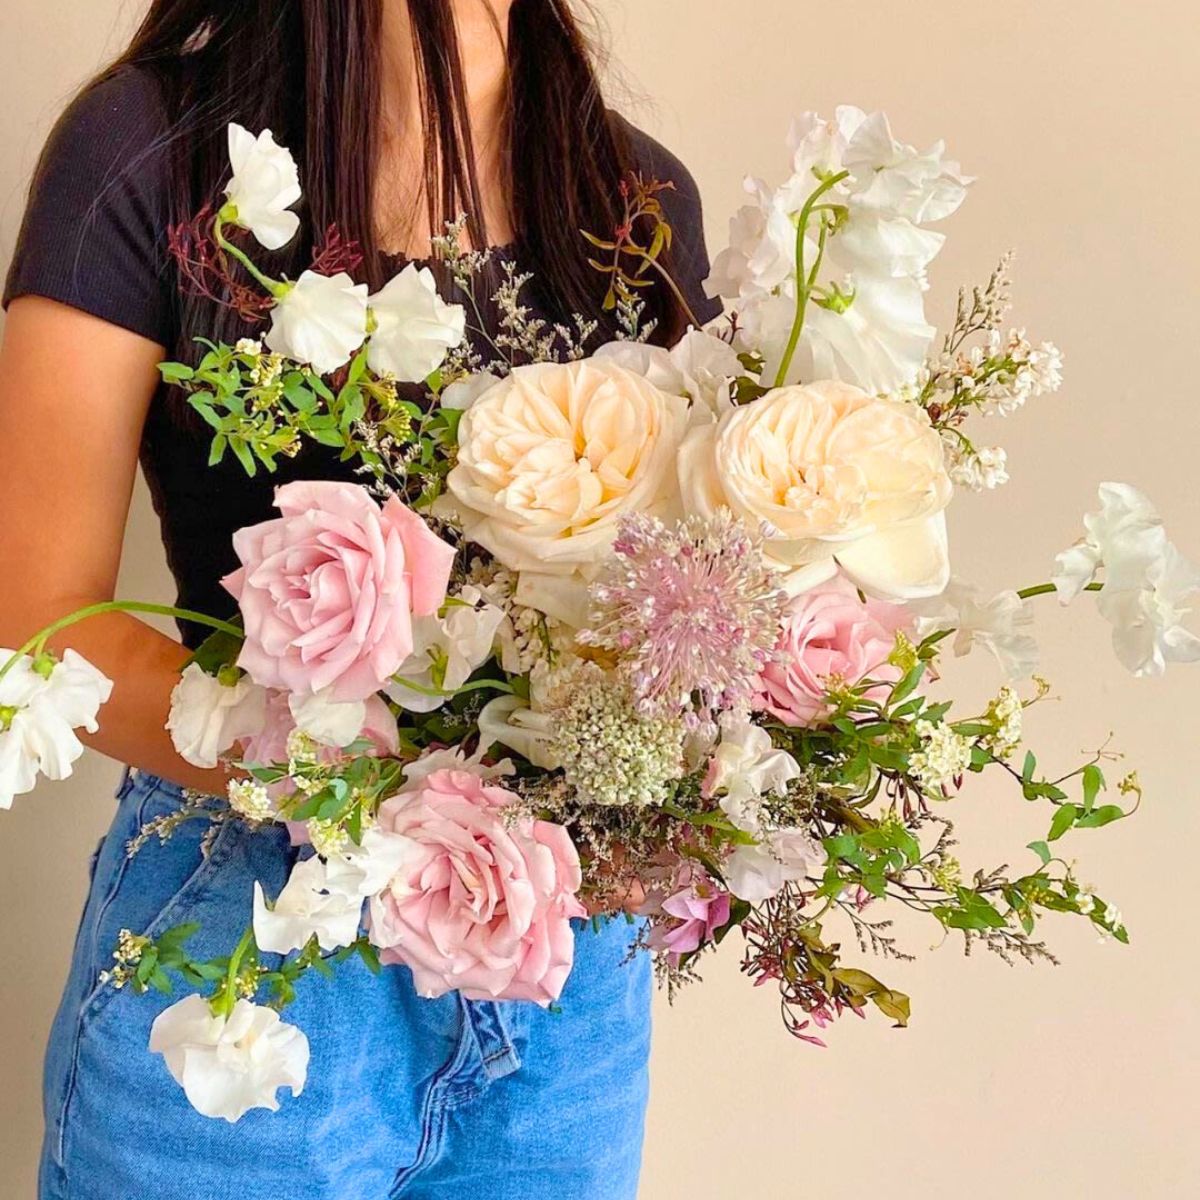 An arrangement using White O Hara roses